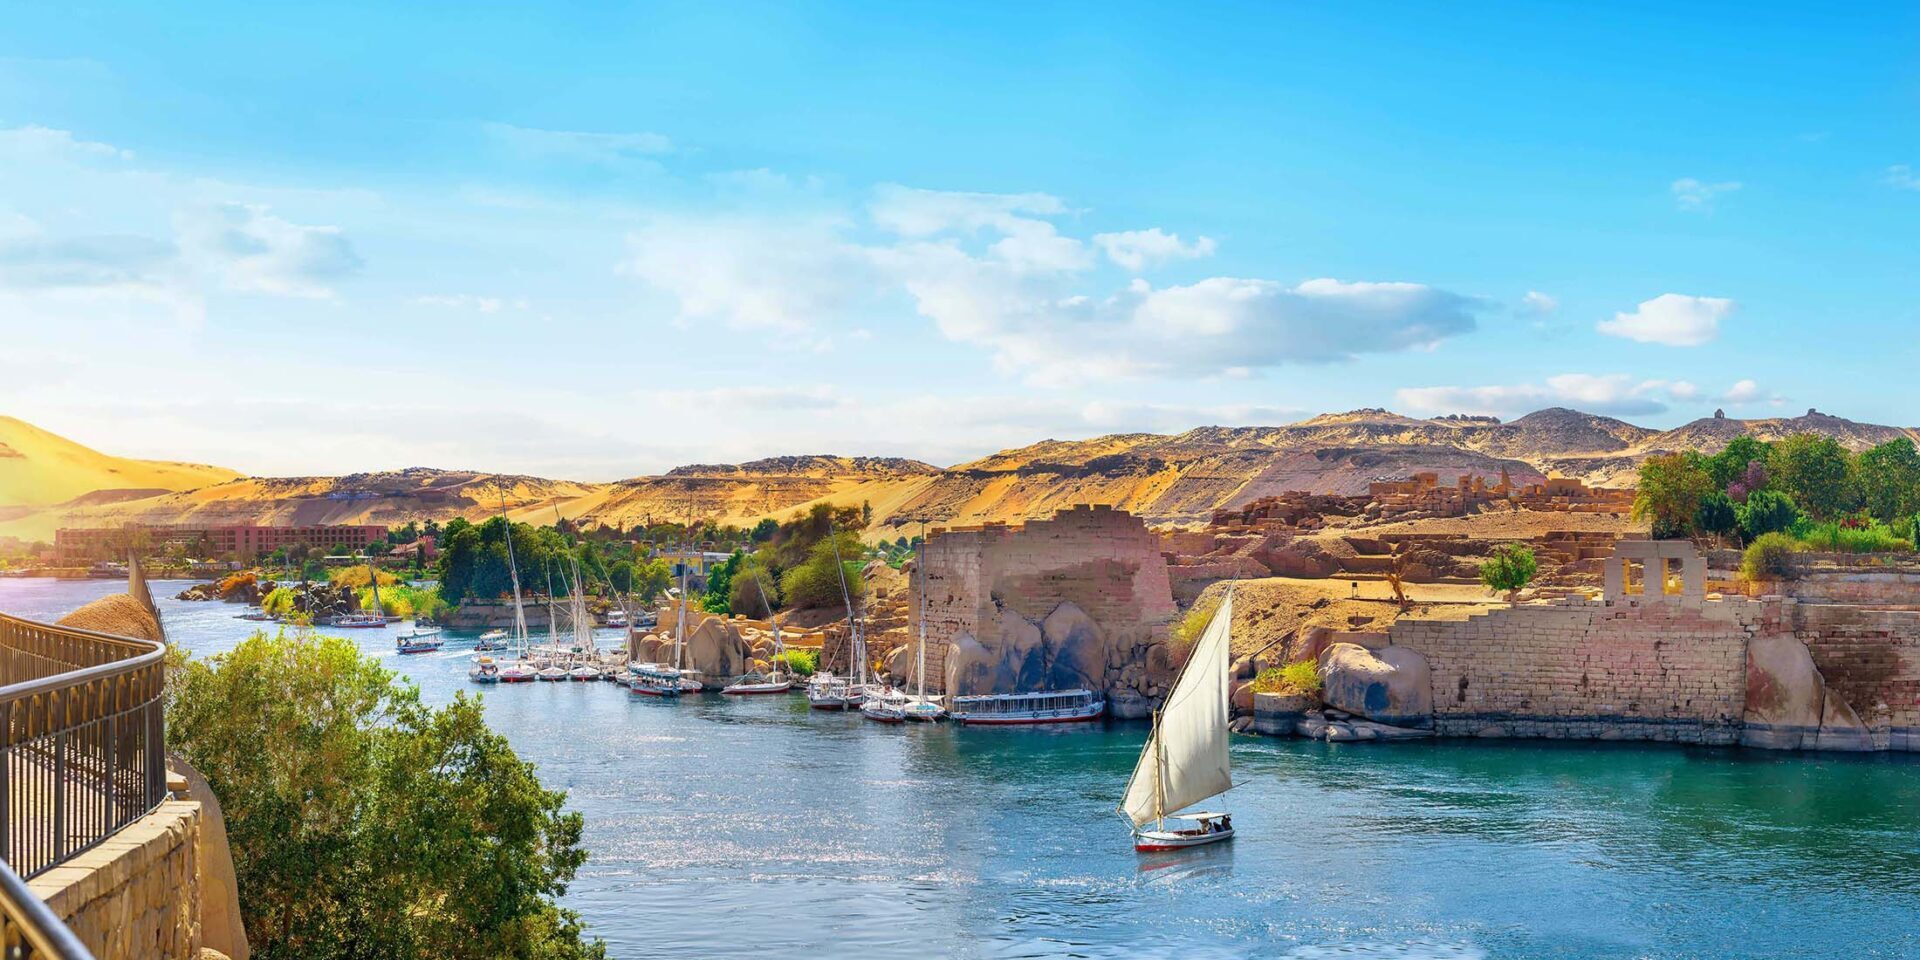 EG_Aswan_View-of-Great-Nile_get1185213783